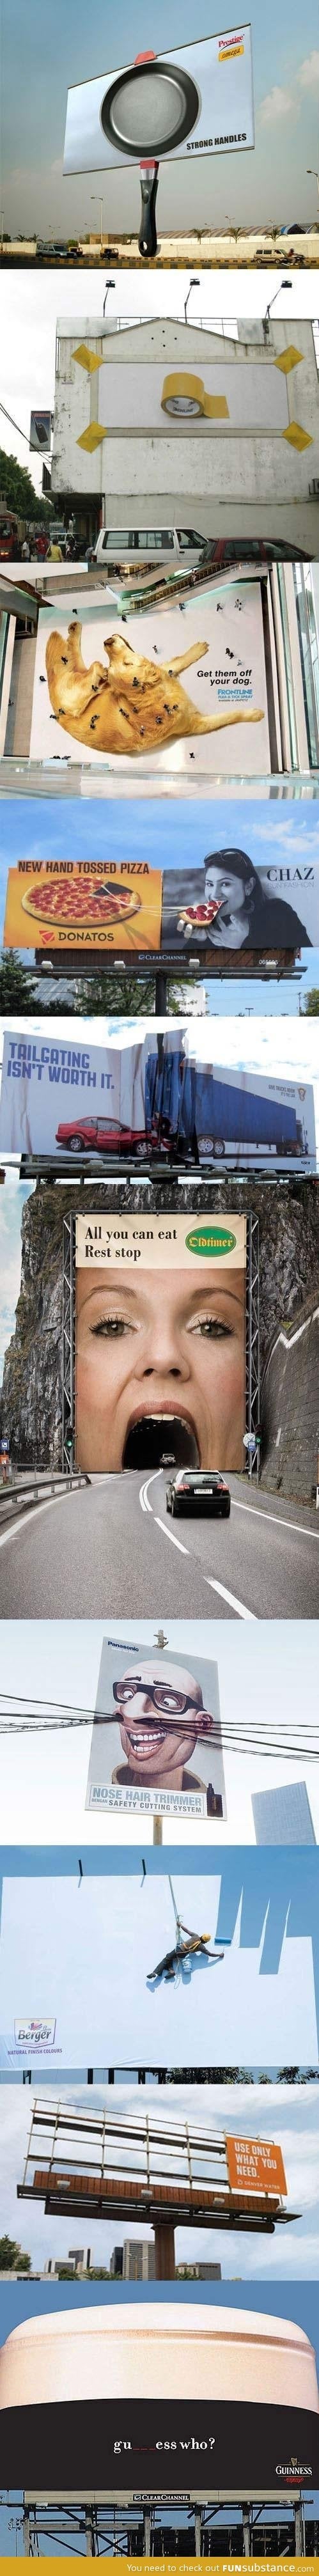 Creative billboards